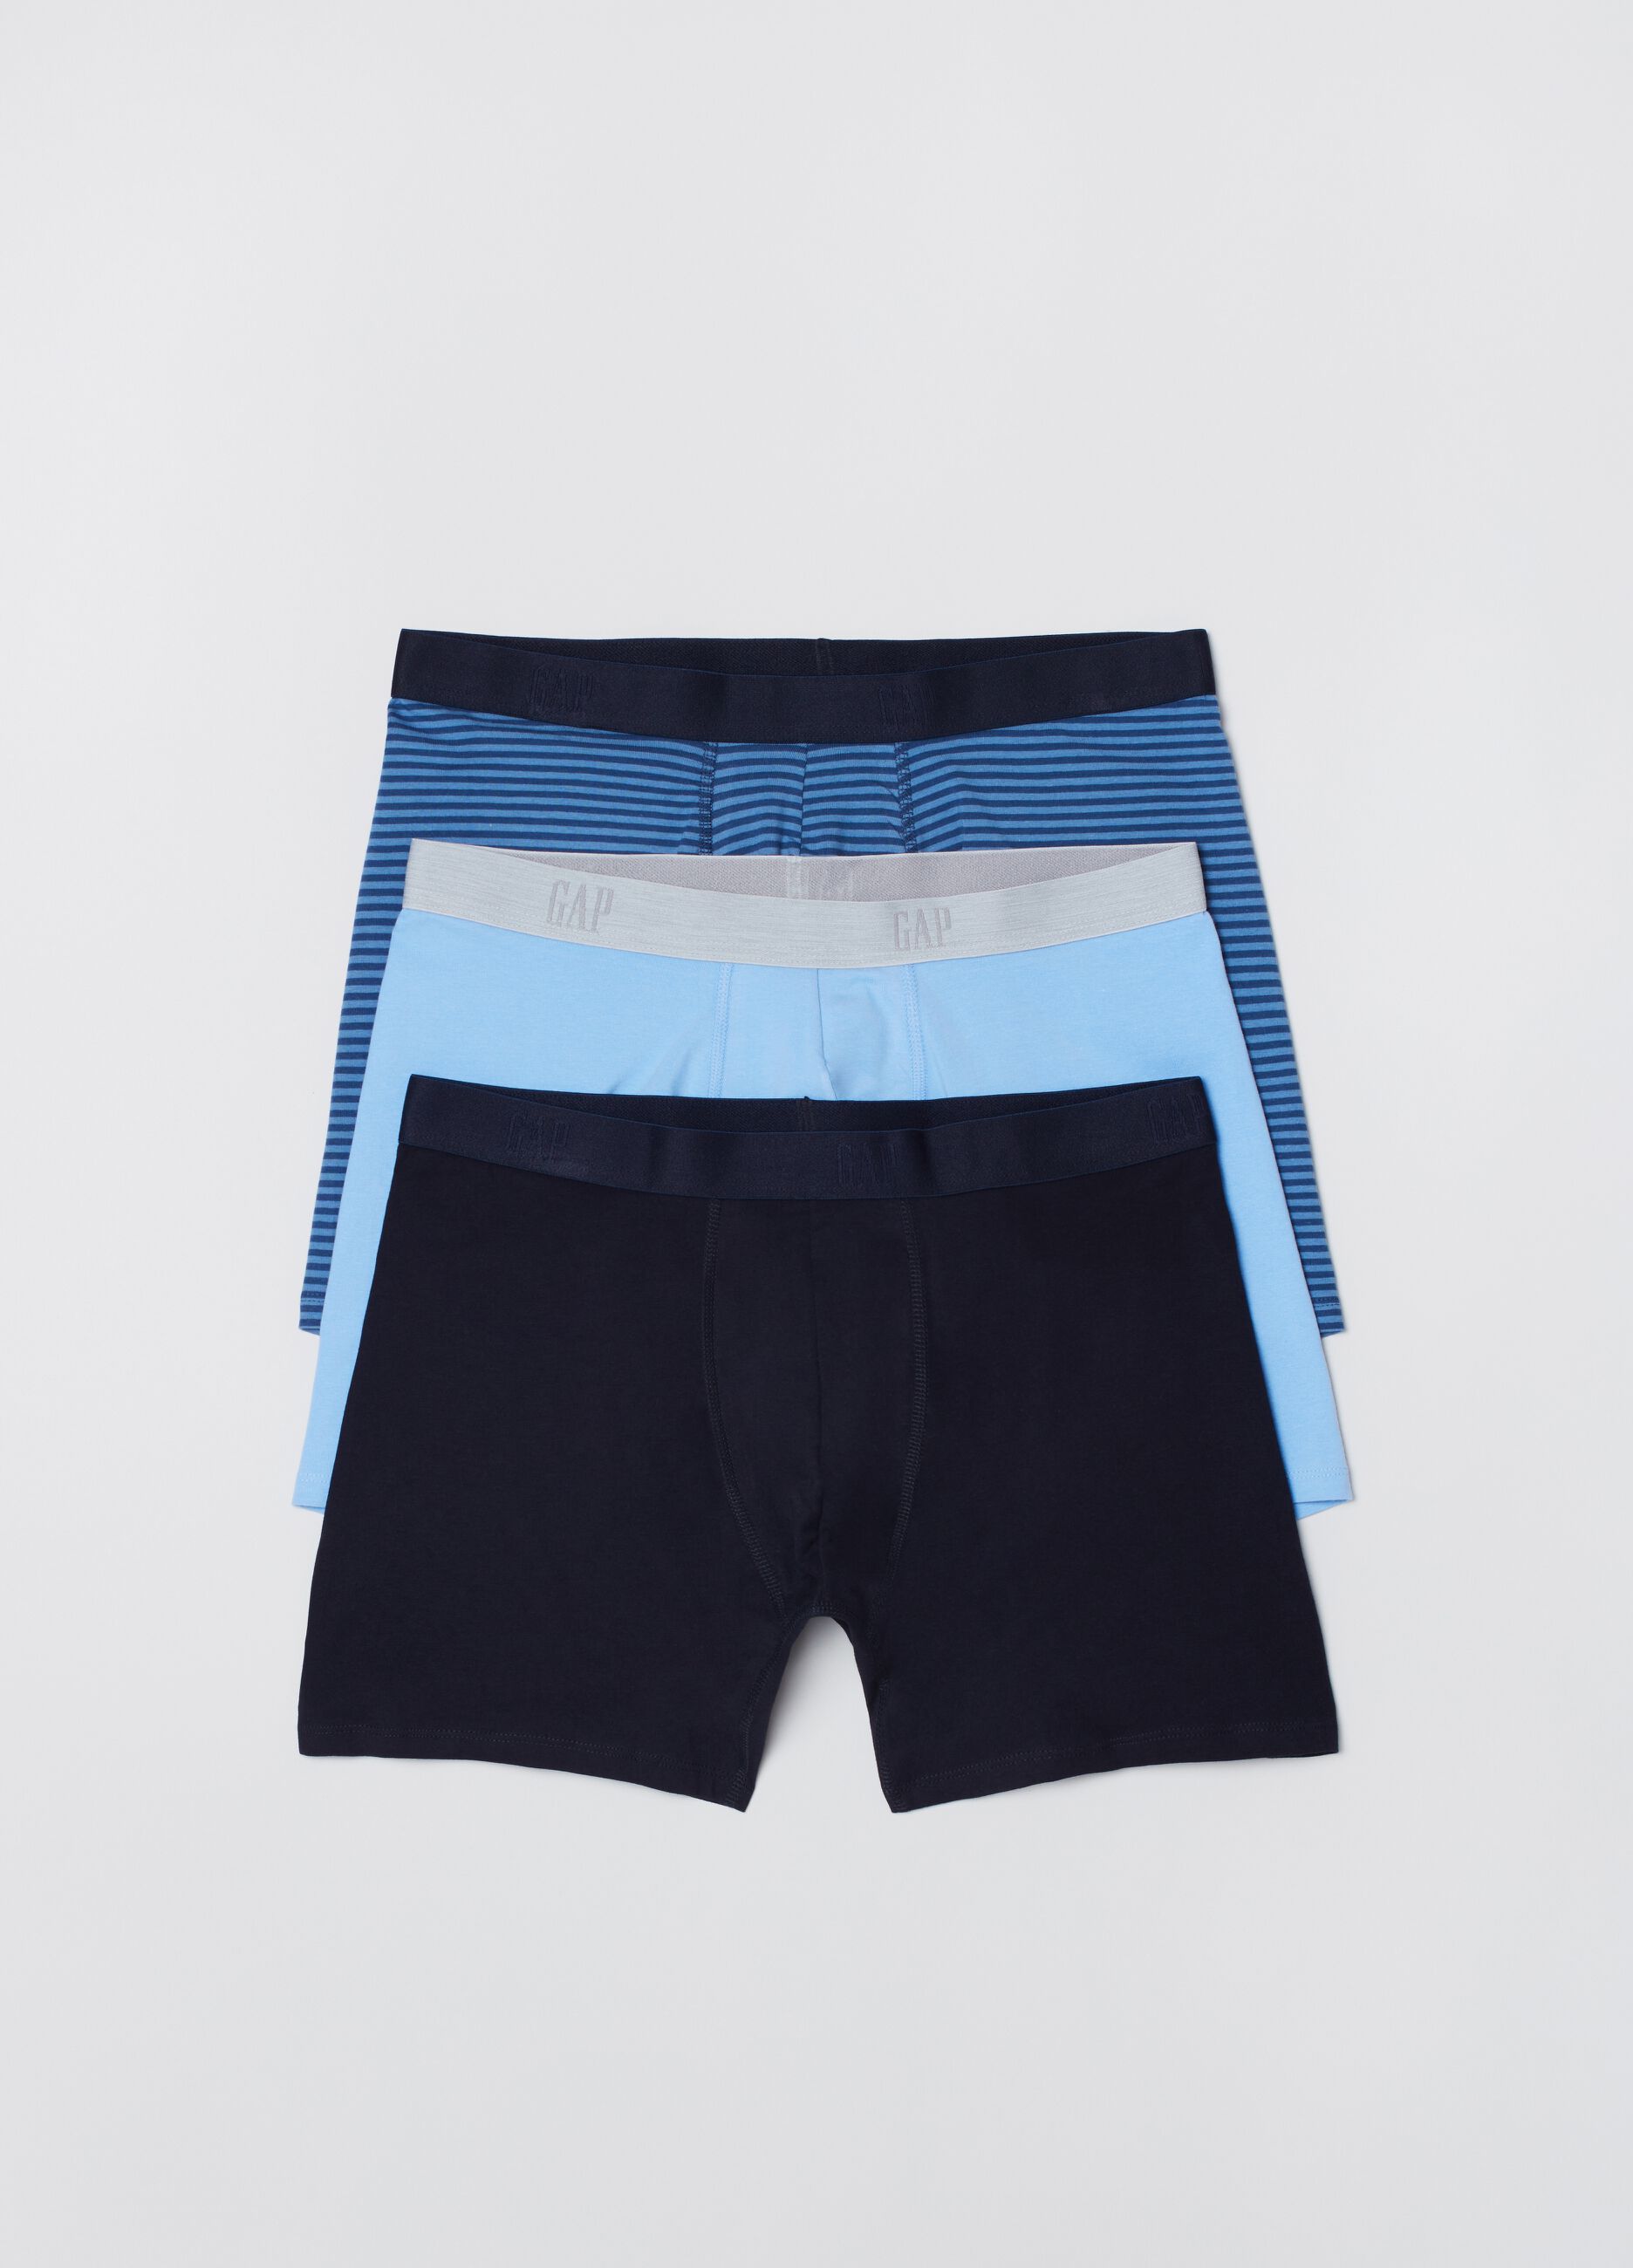 GAP Man's Blue/Light Blue Three-pack stretch cotton boxer shorts